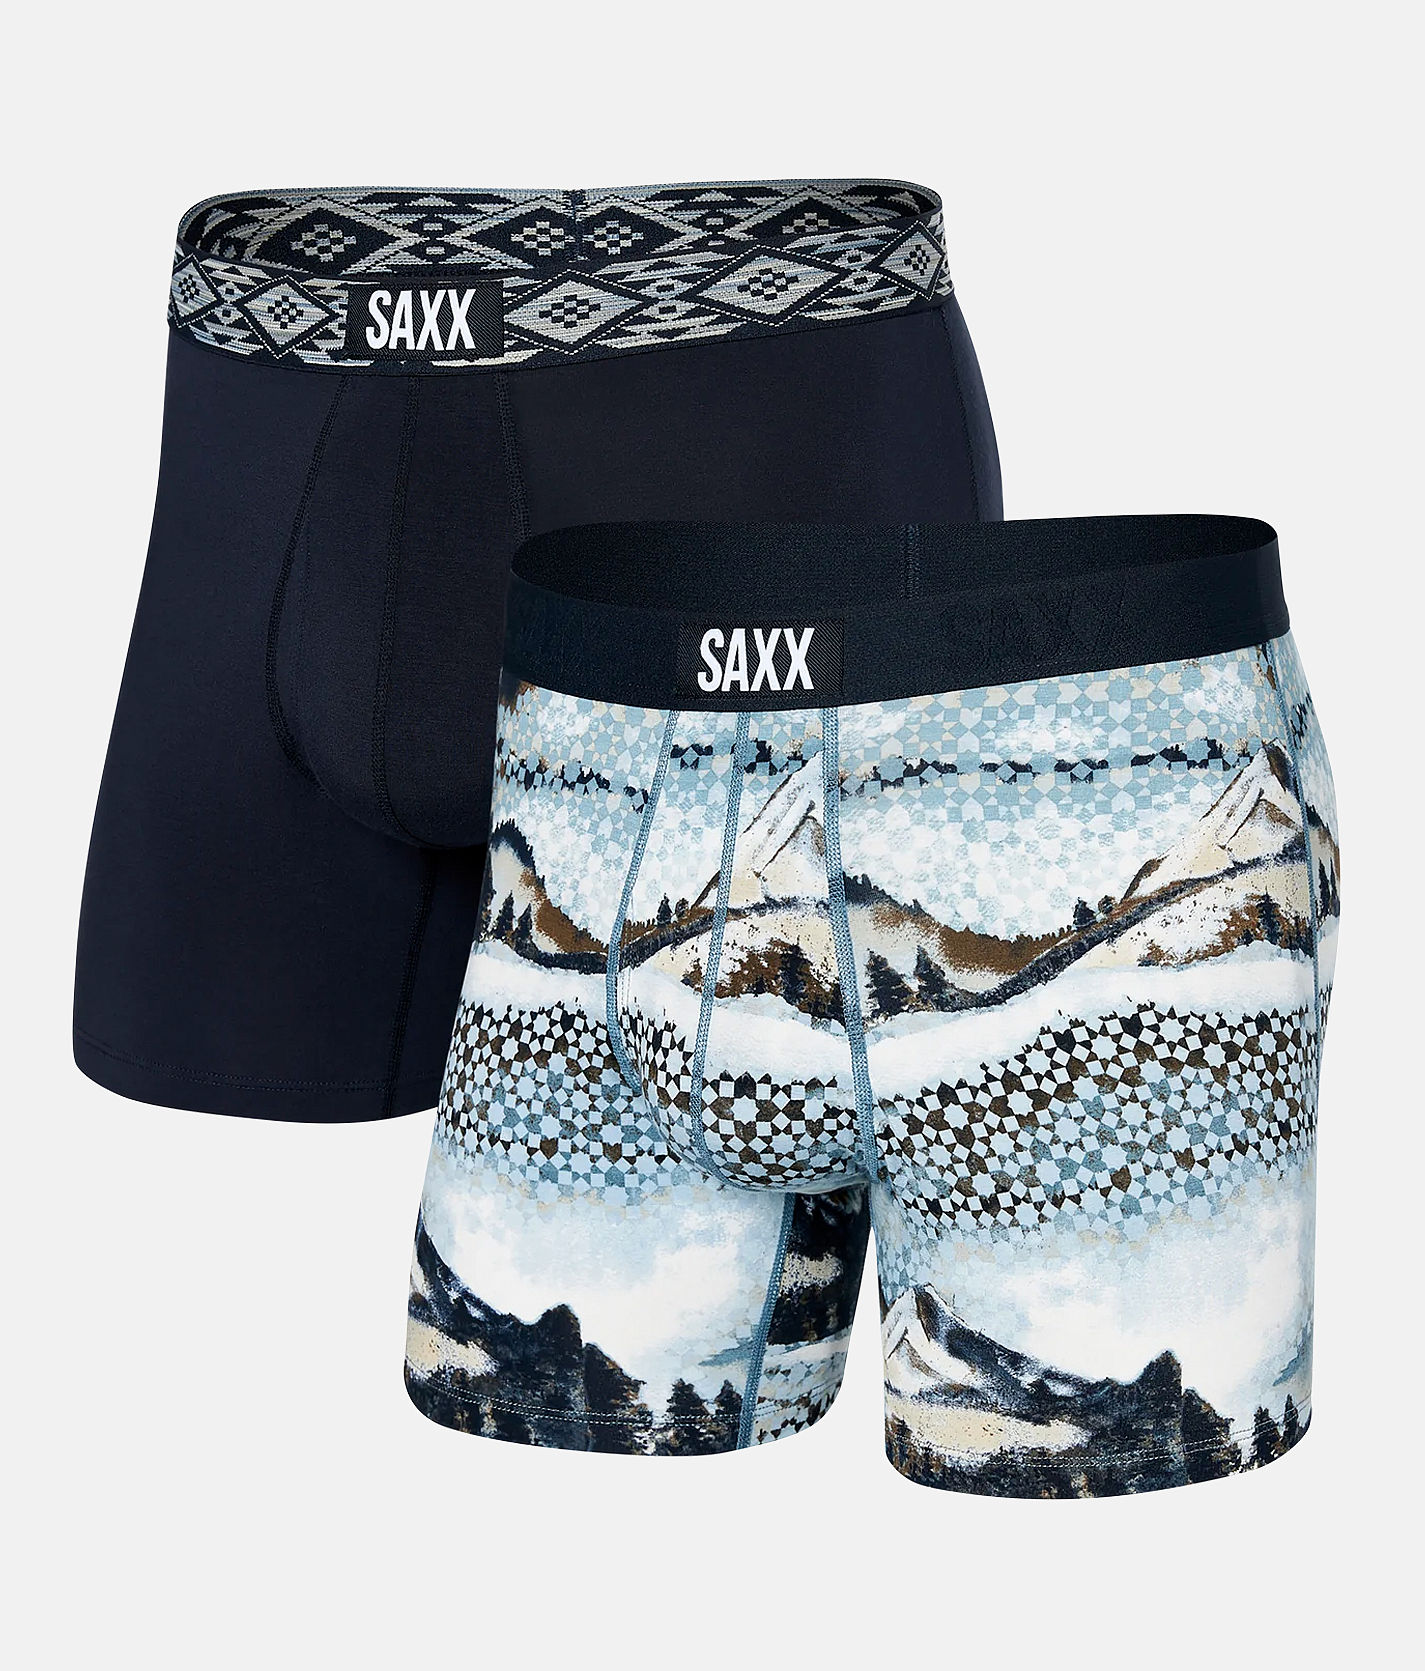 SAXX Ultra Super Soft 2 Pack Stretch Boxer Briefs - Men's Boxers